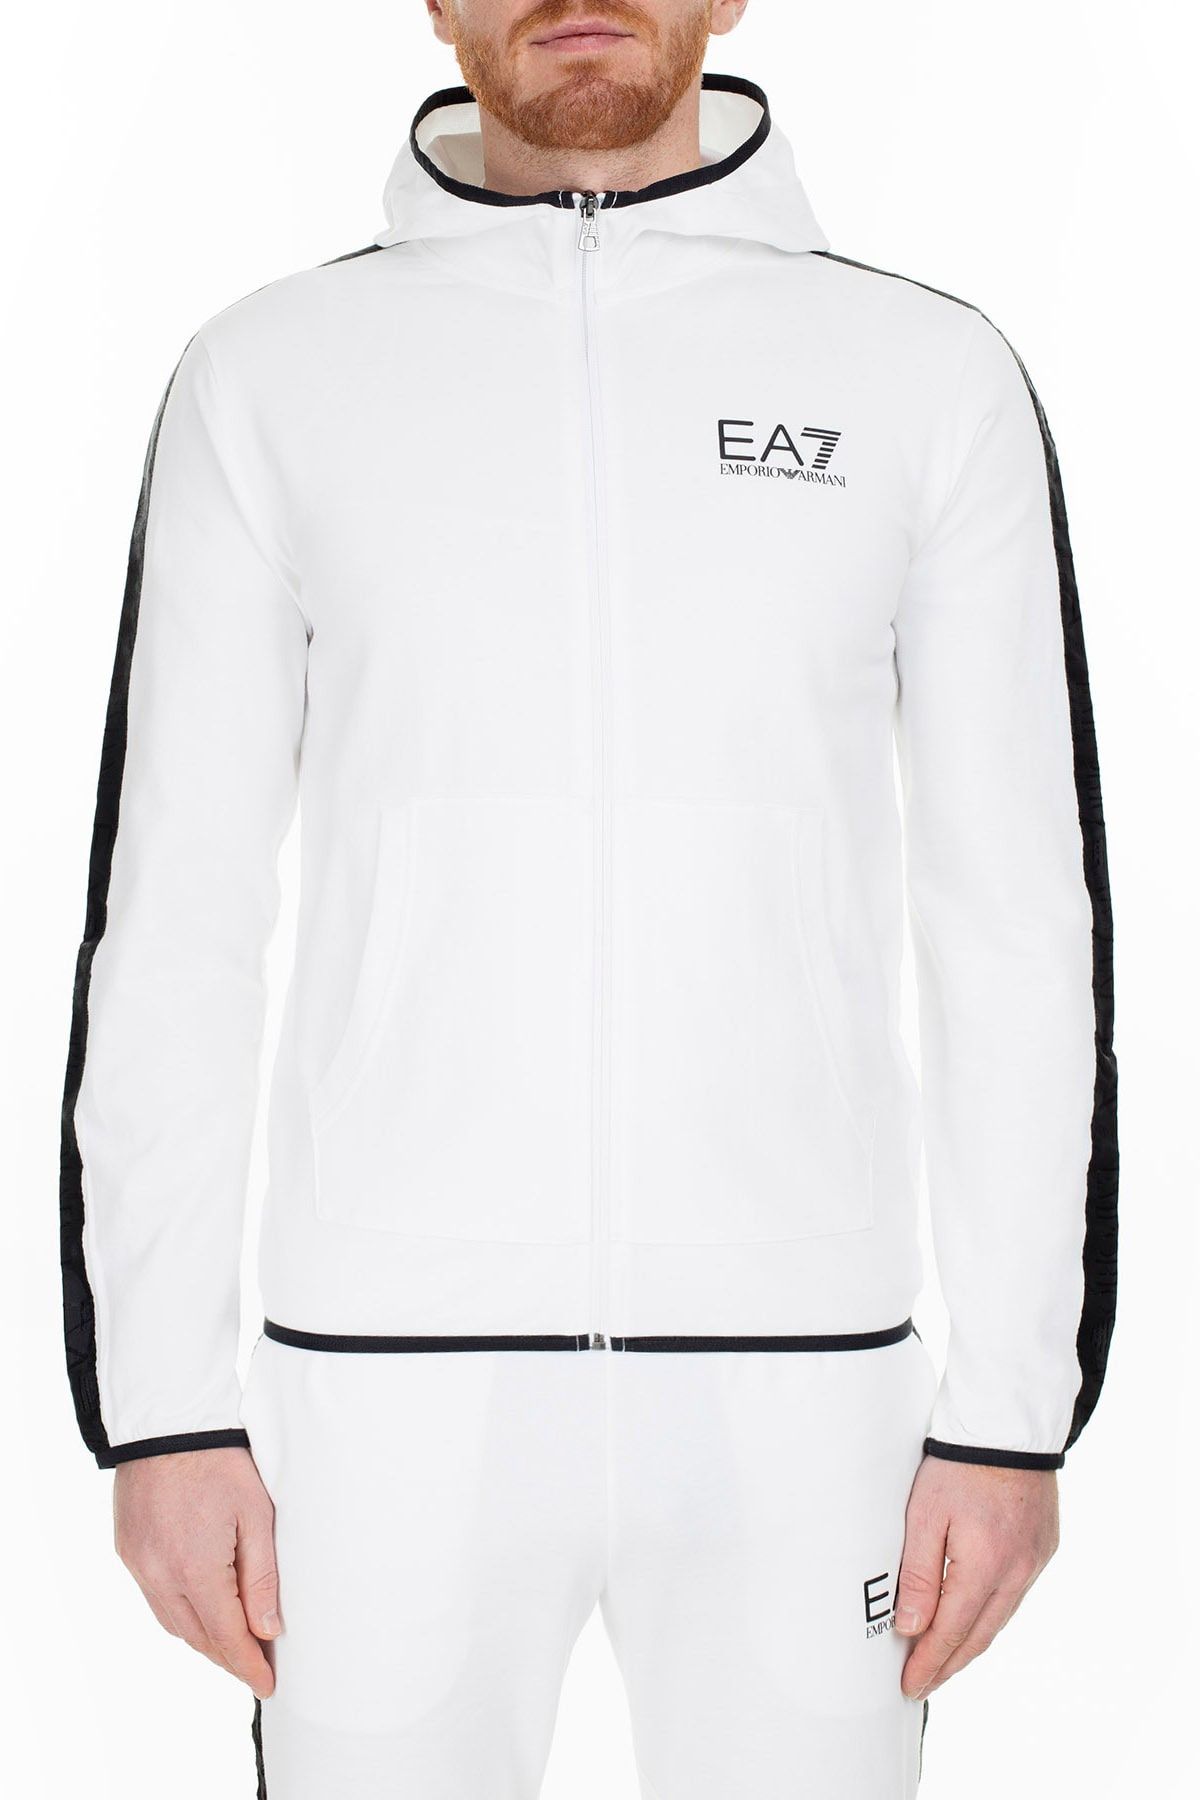 EA7 Erkek Beyaz Sweatshirt